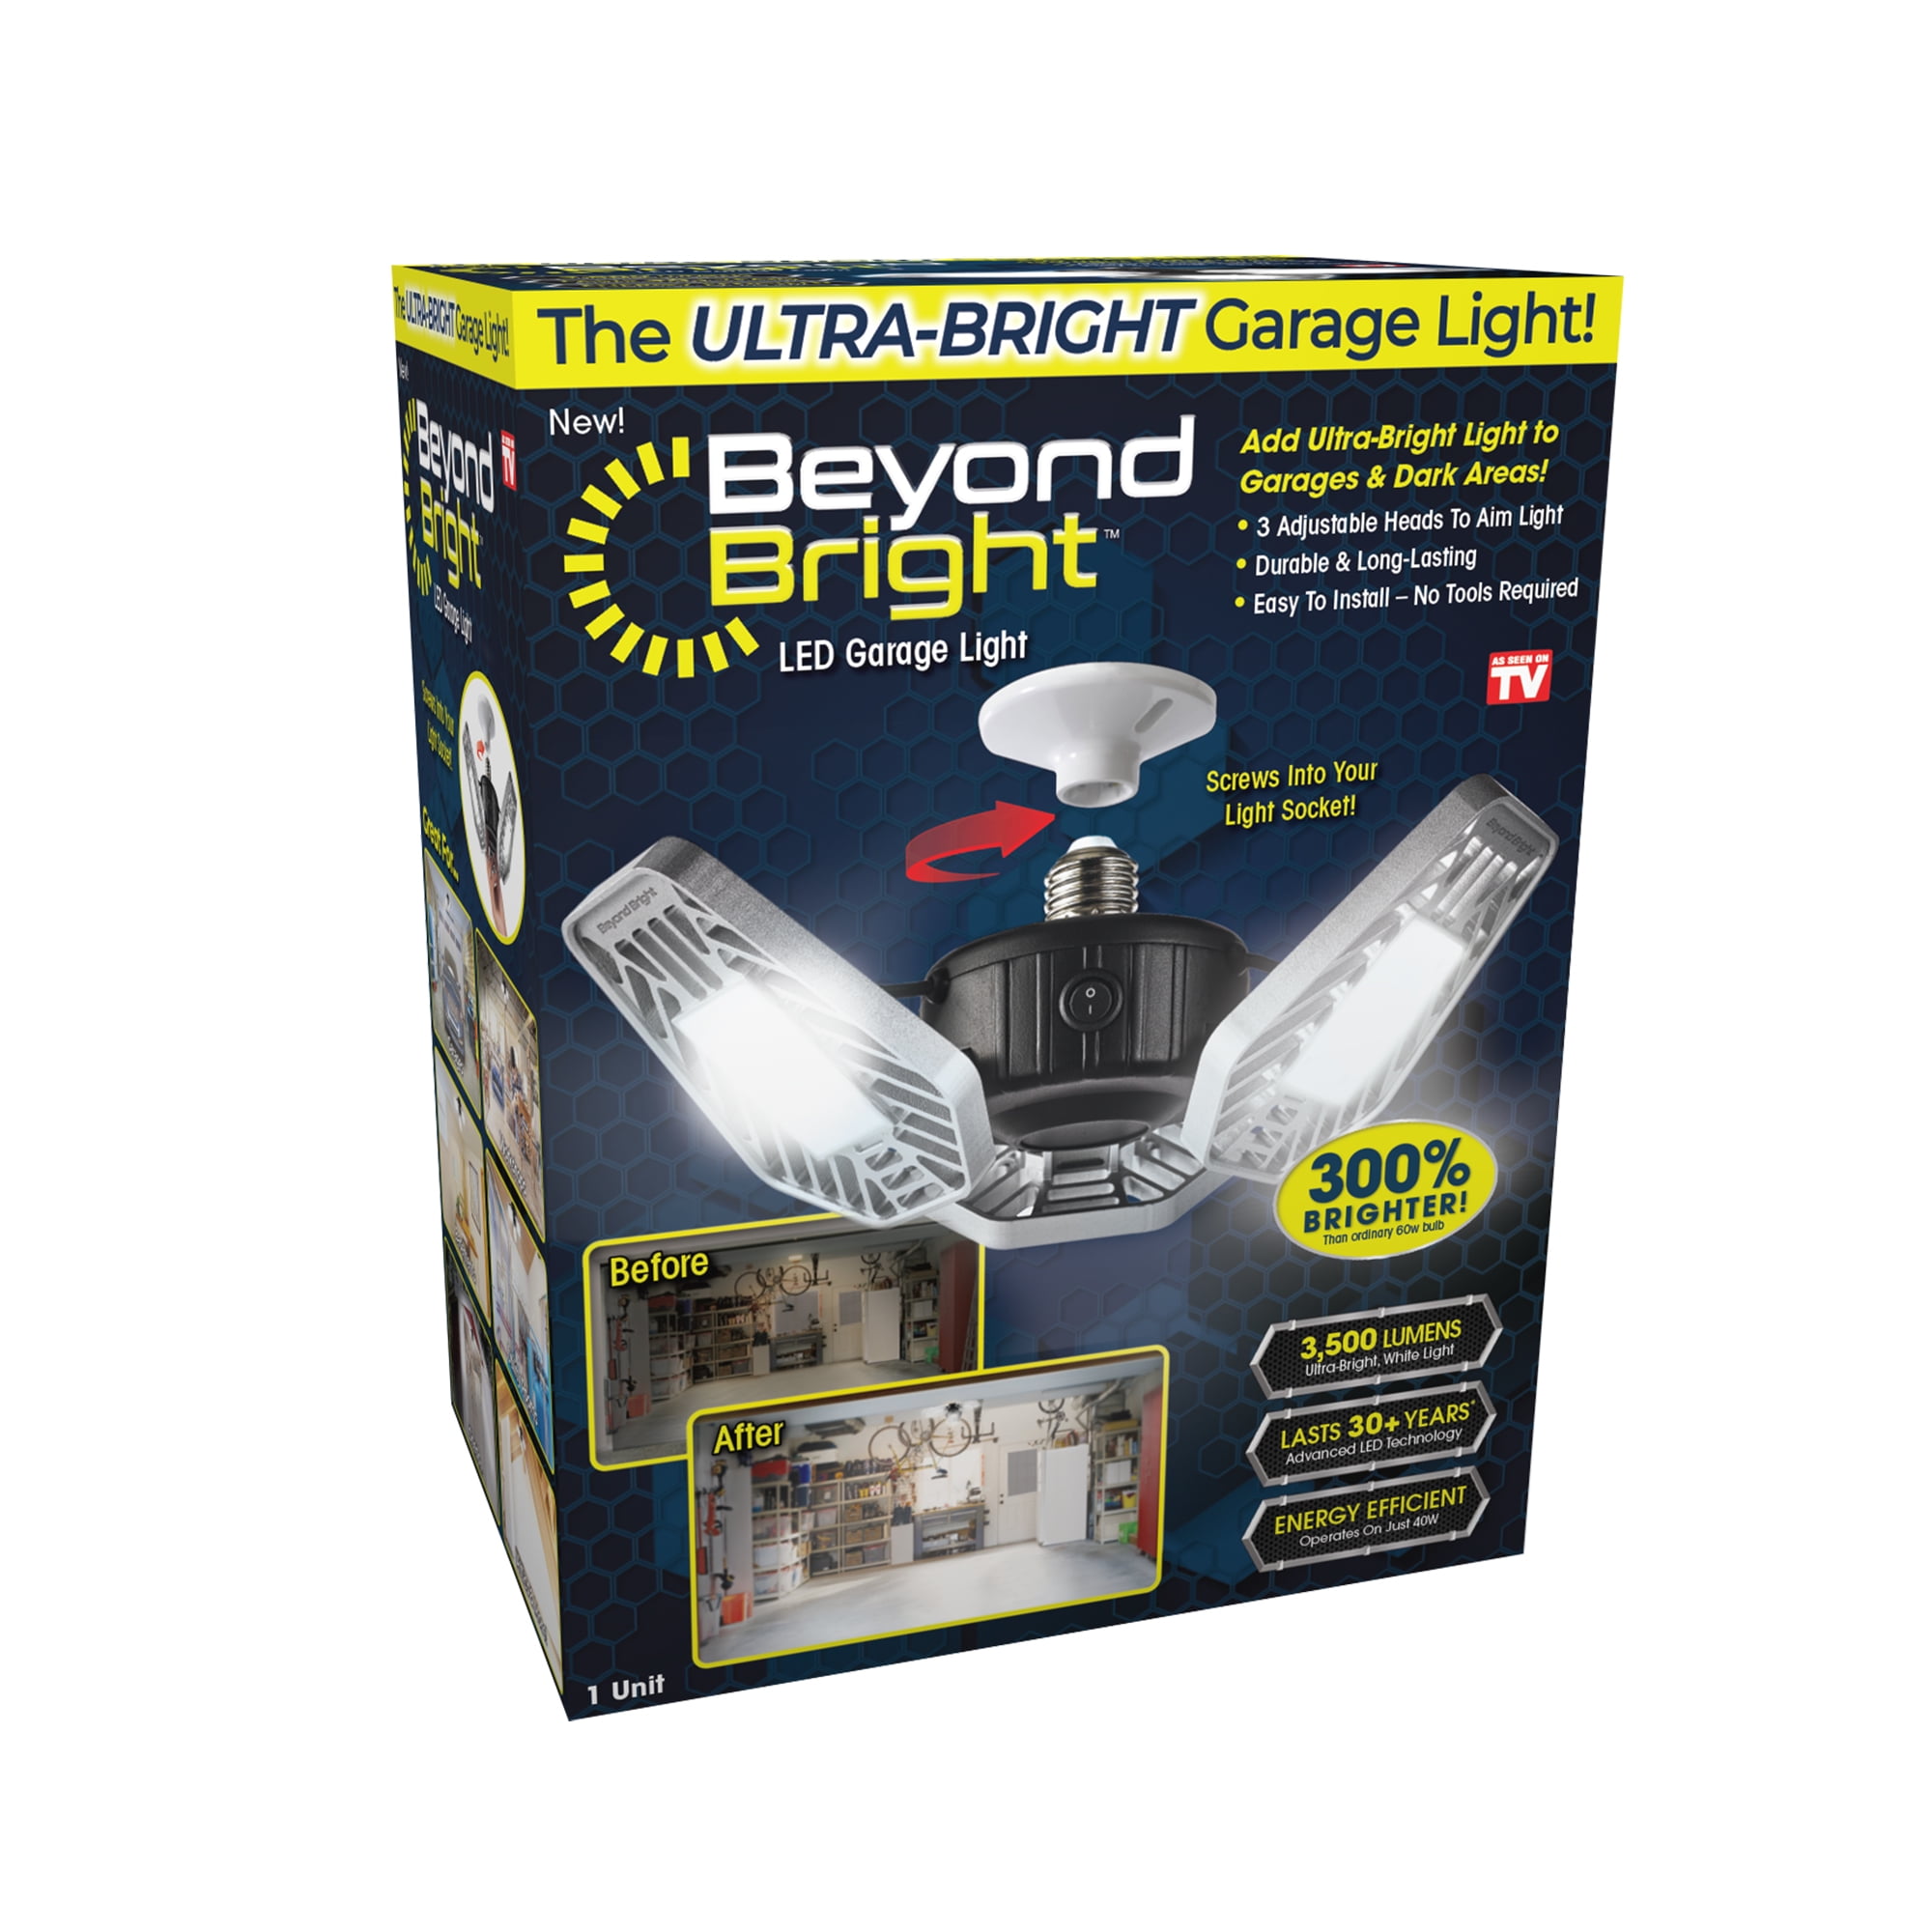 Beyond Bright Led Garage Light As Seen, Super Bright Led Garage Lights Home Depot